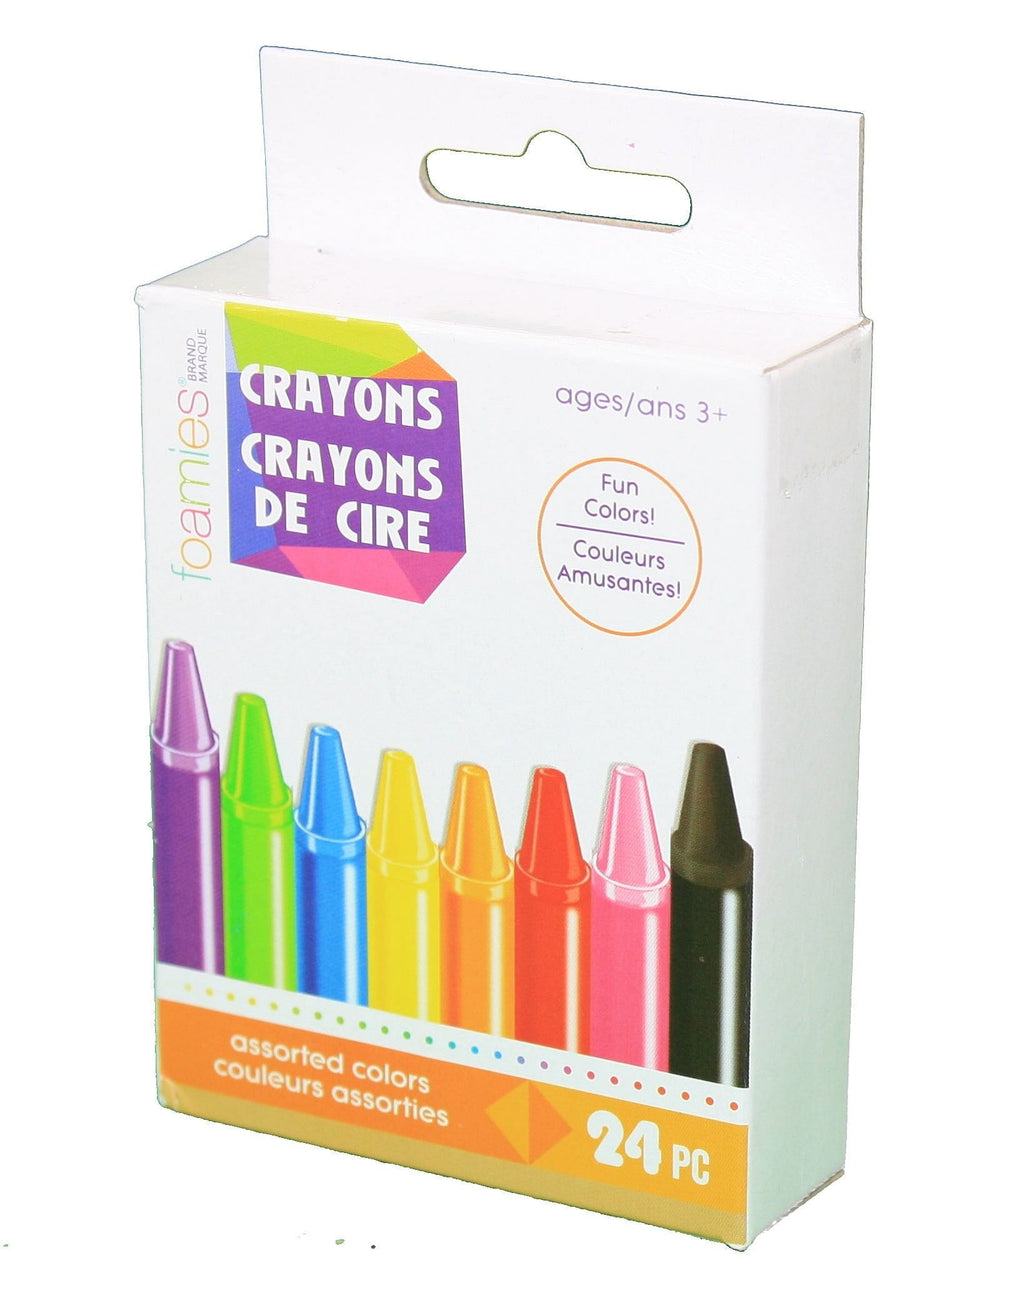 Brilliant Color Crayons - 24 Count